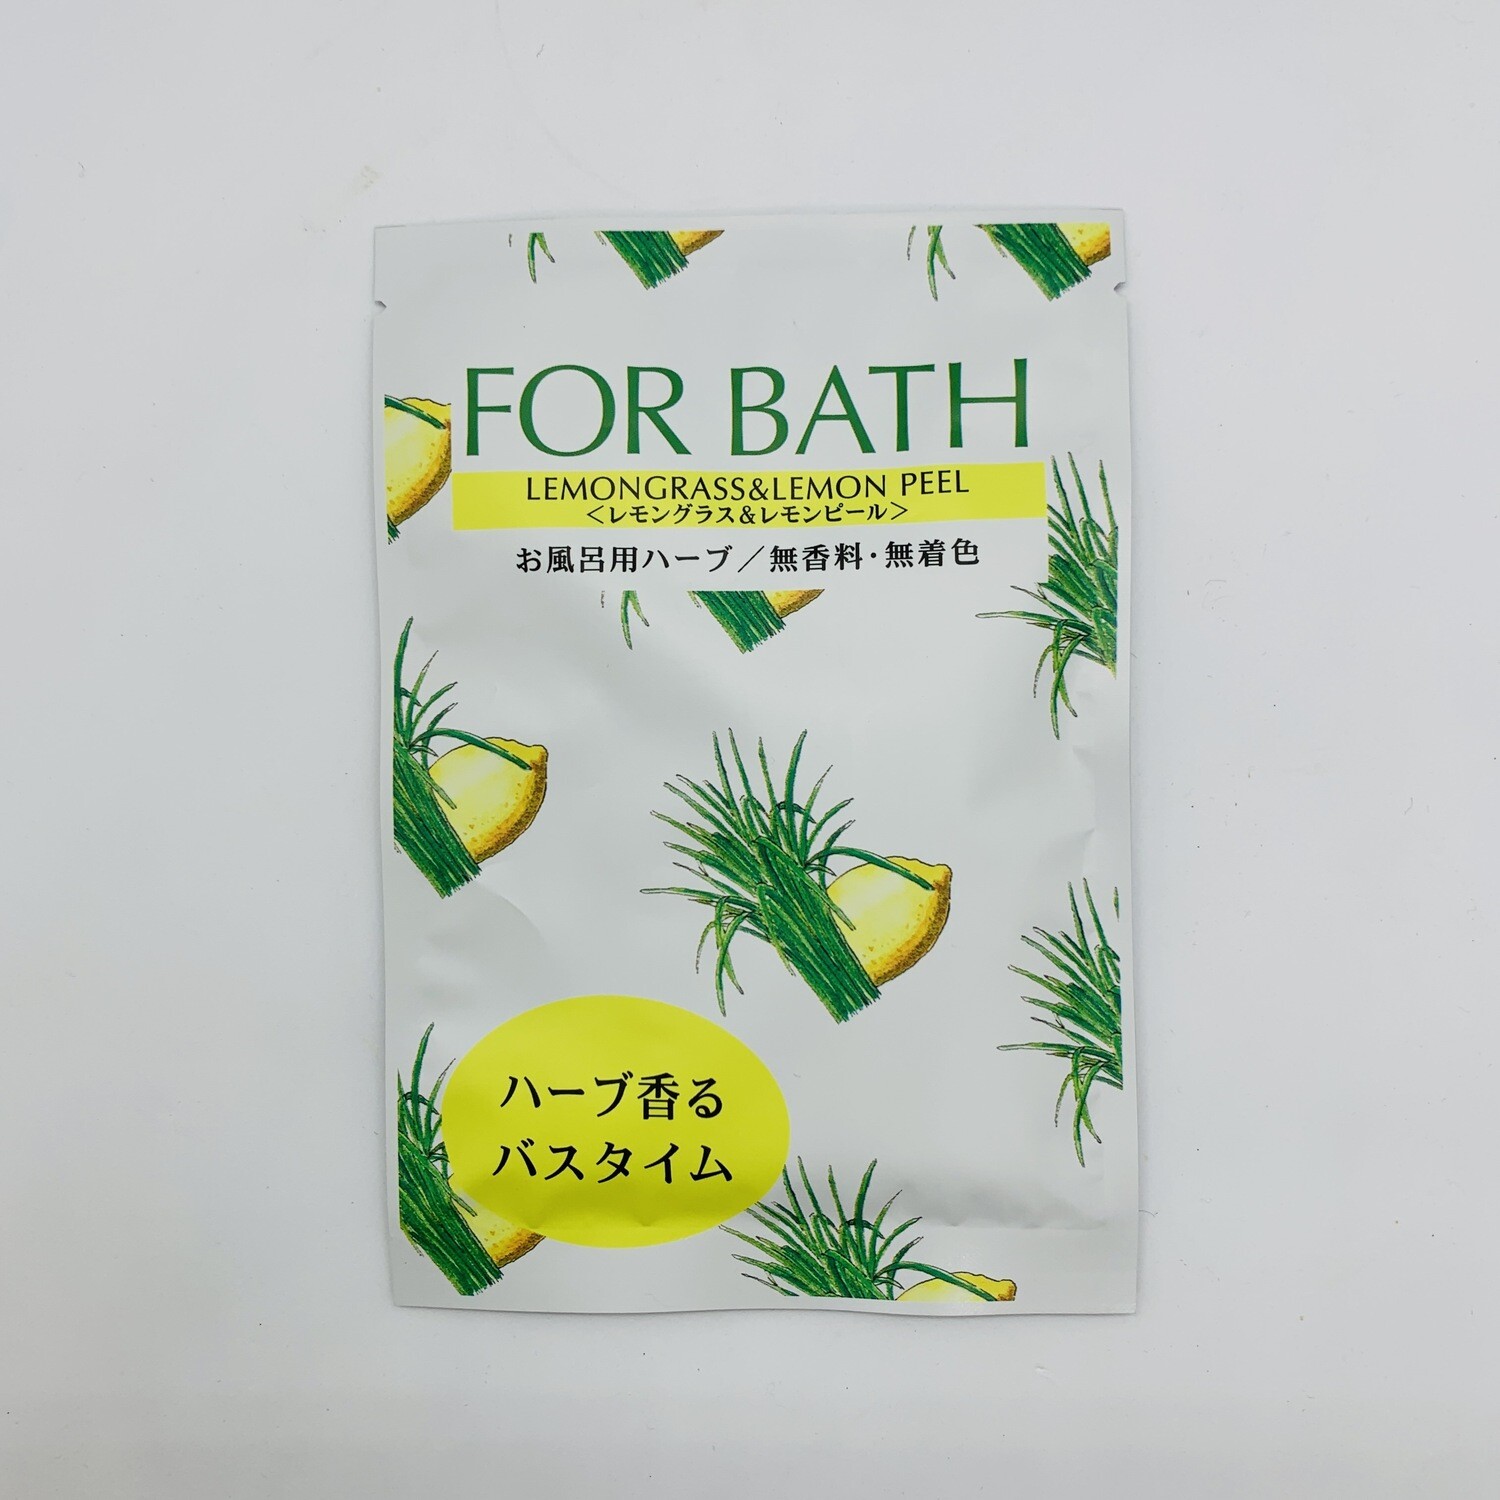 FOR BATH Lemongrass